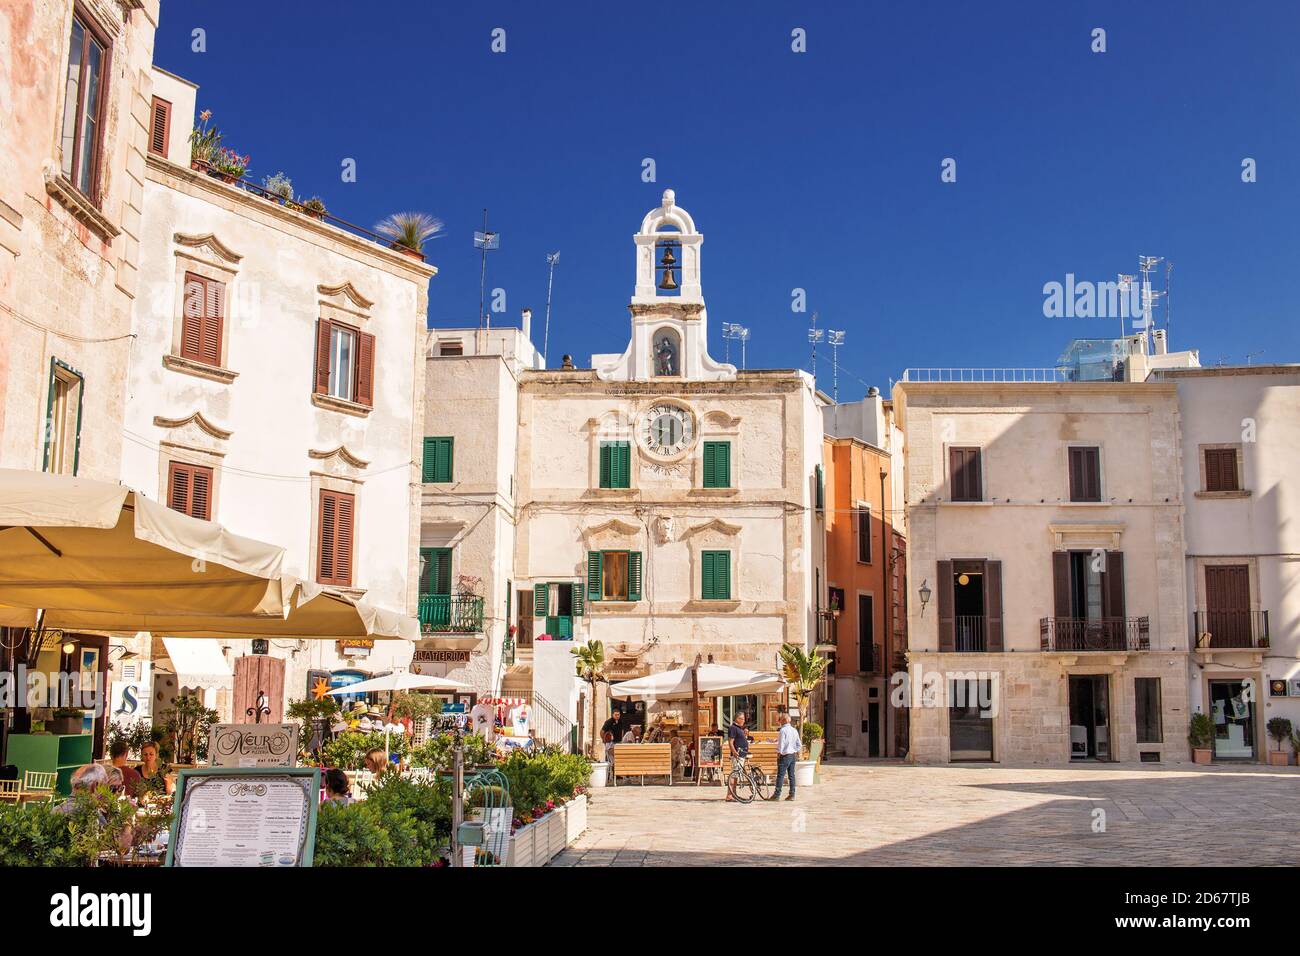 Polignano a Mare, Puglia, Italia - 05/26/2018 - la torre del reloj de referencia en el centro de la plaza principal del casco antiguo Foto de stock